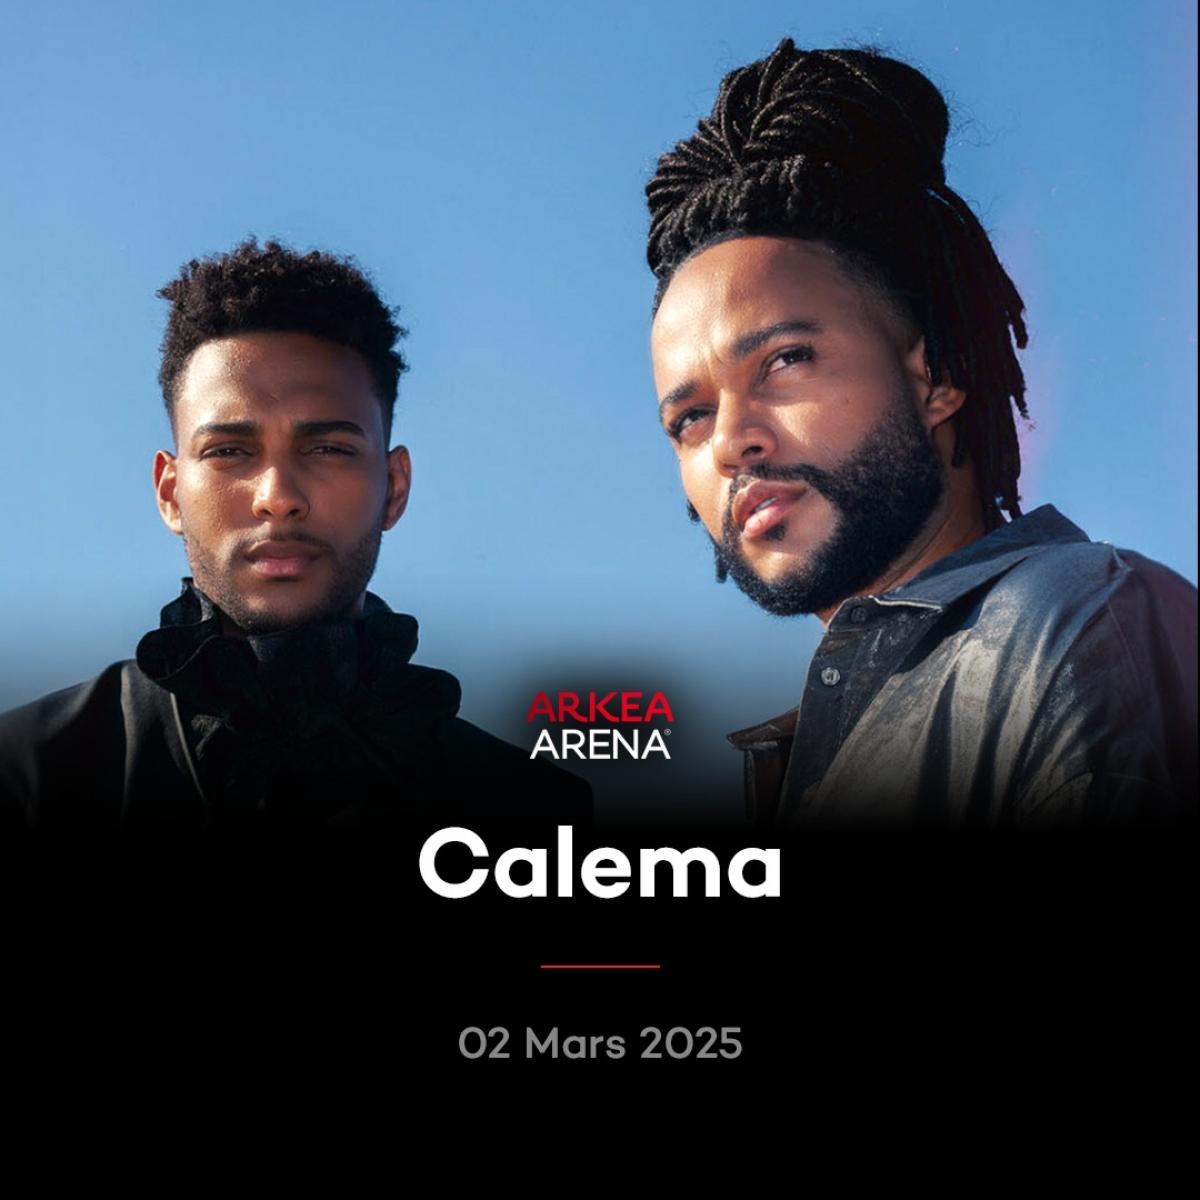 Calema at Arkea Arena Tickets